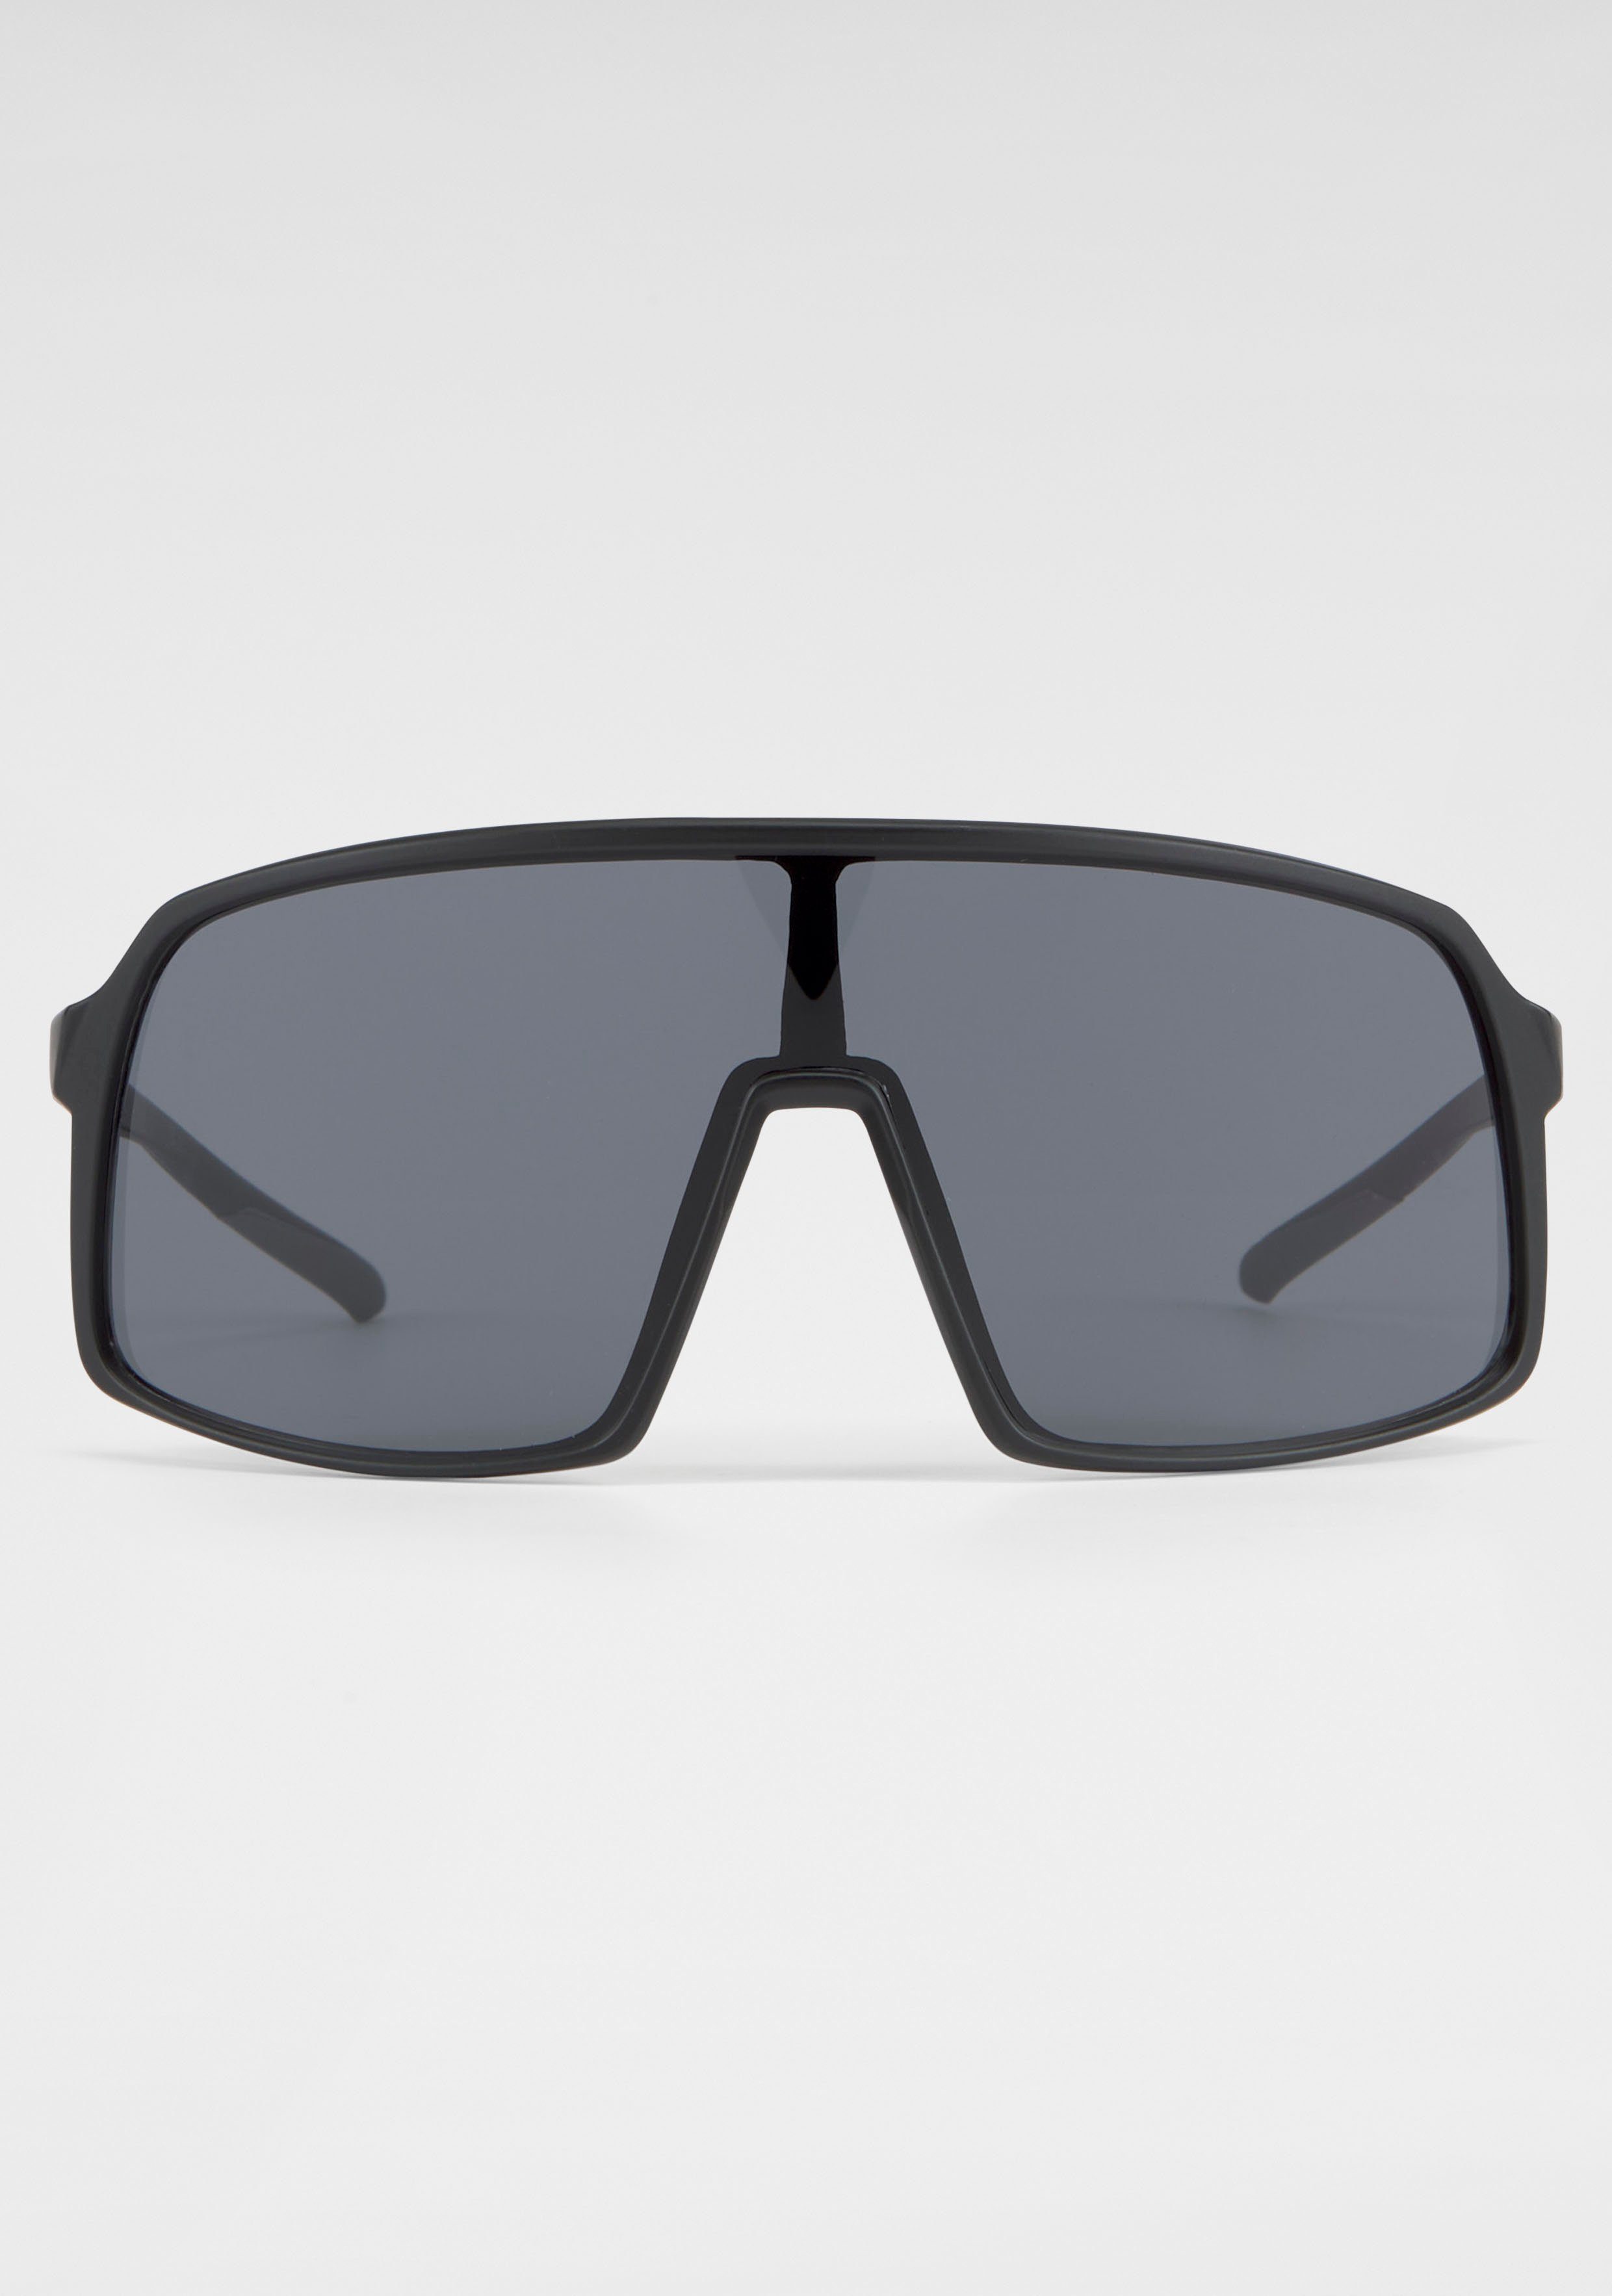 IN schwarz Eyewear BLACK BACK große Gläser Sonnenbrille